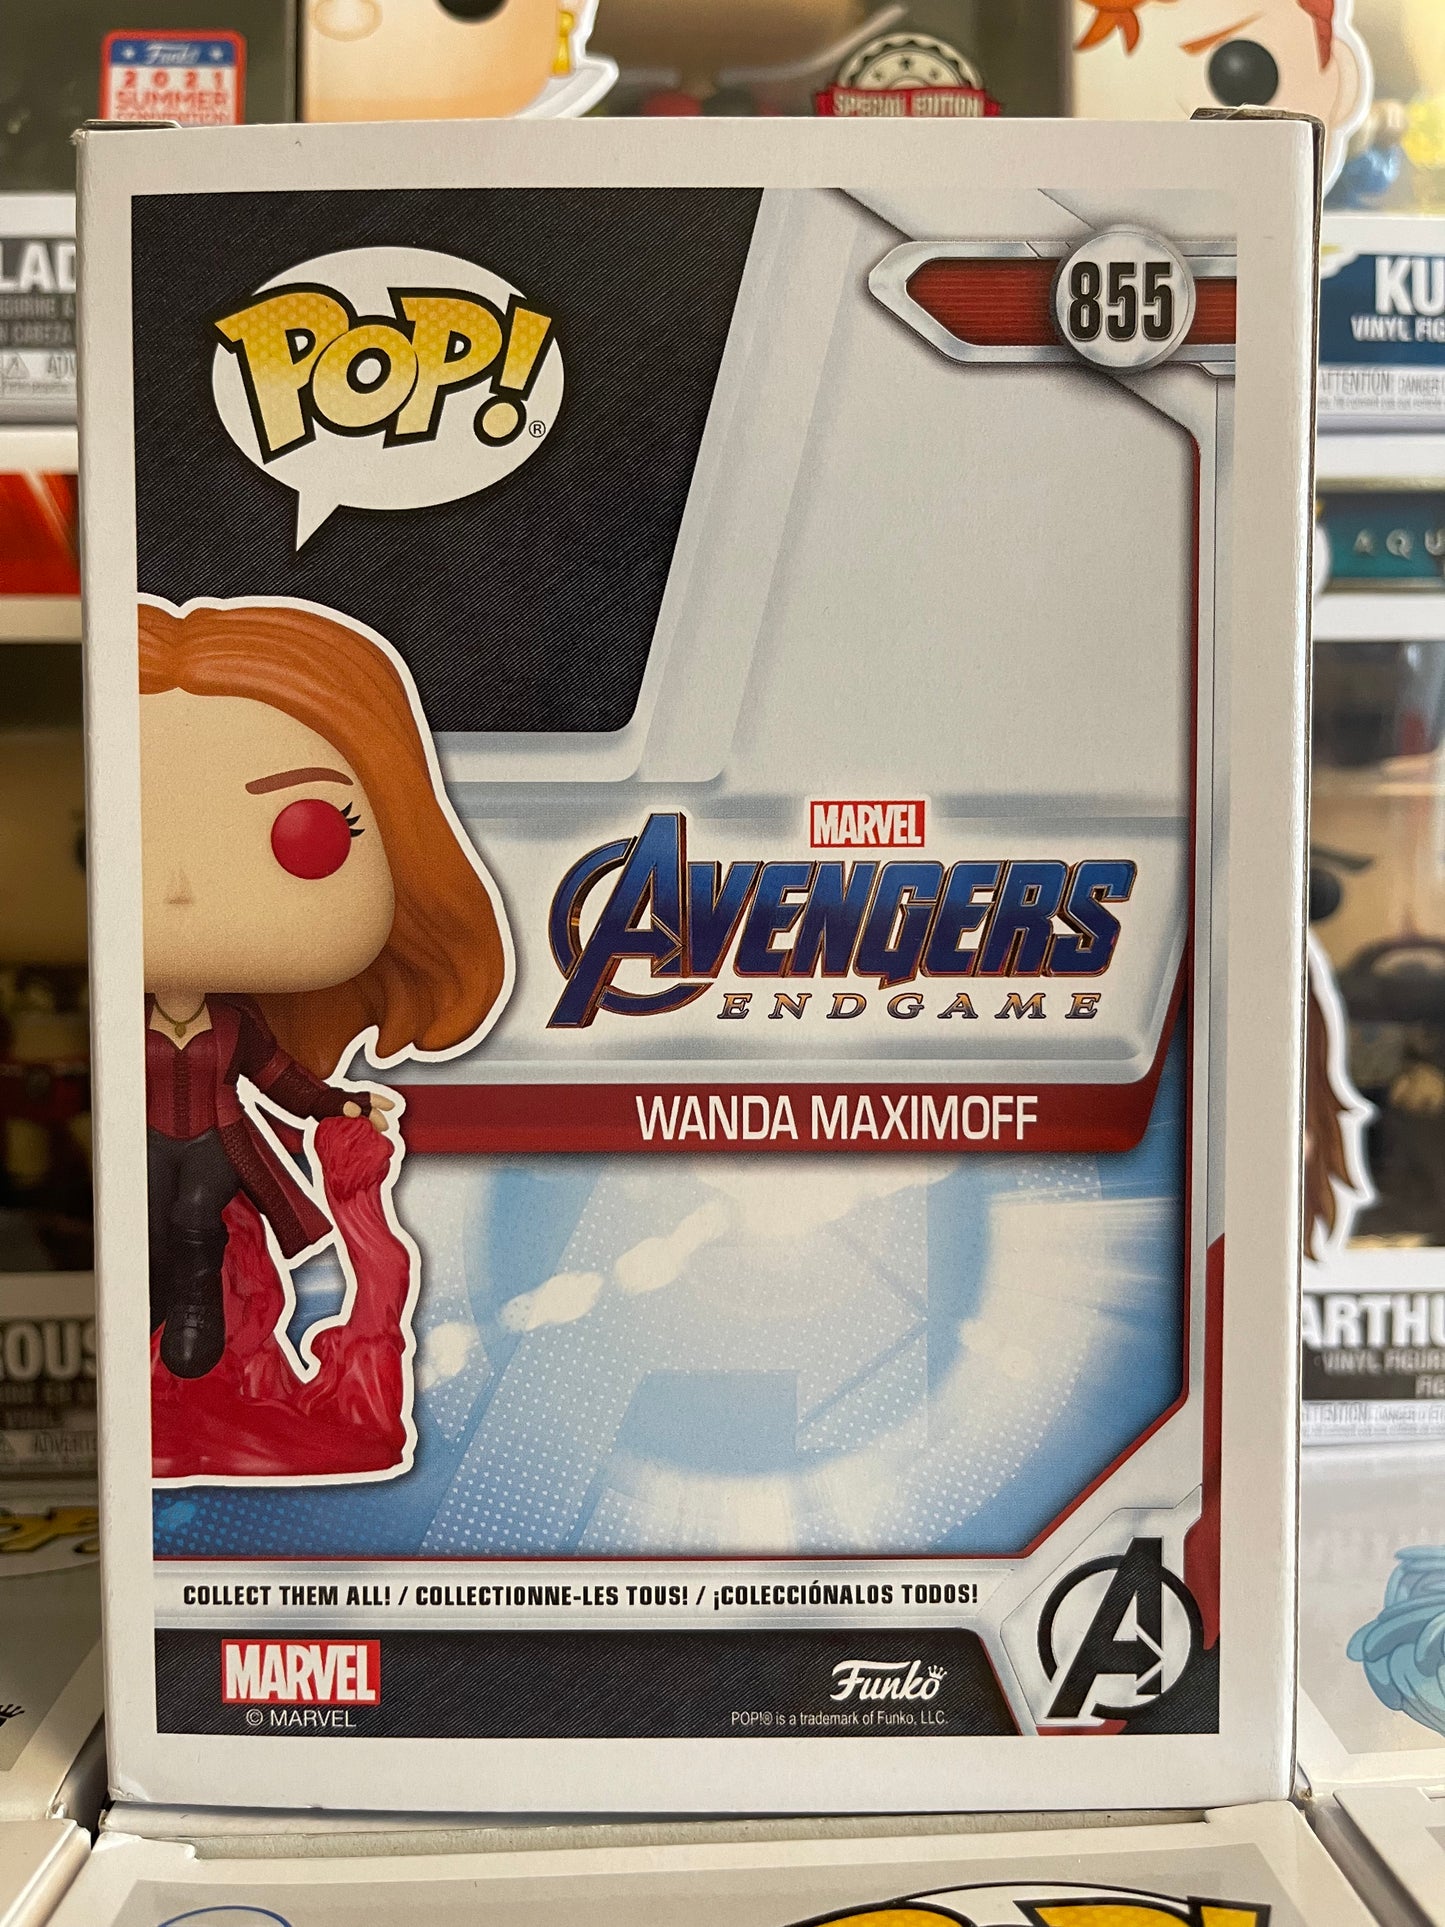 Marvel Avengers Endgame - Wanda Maximoff (Glow in the Dark) (855)